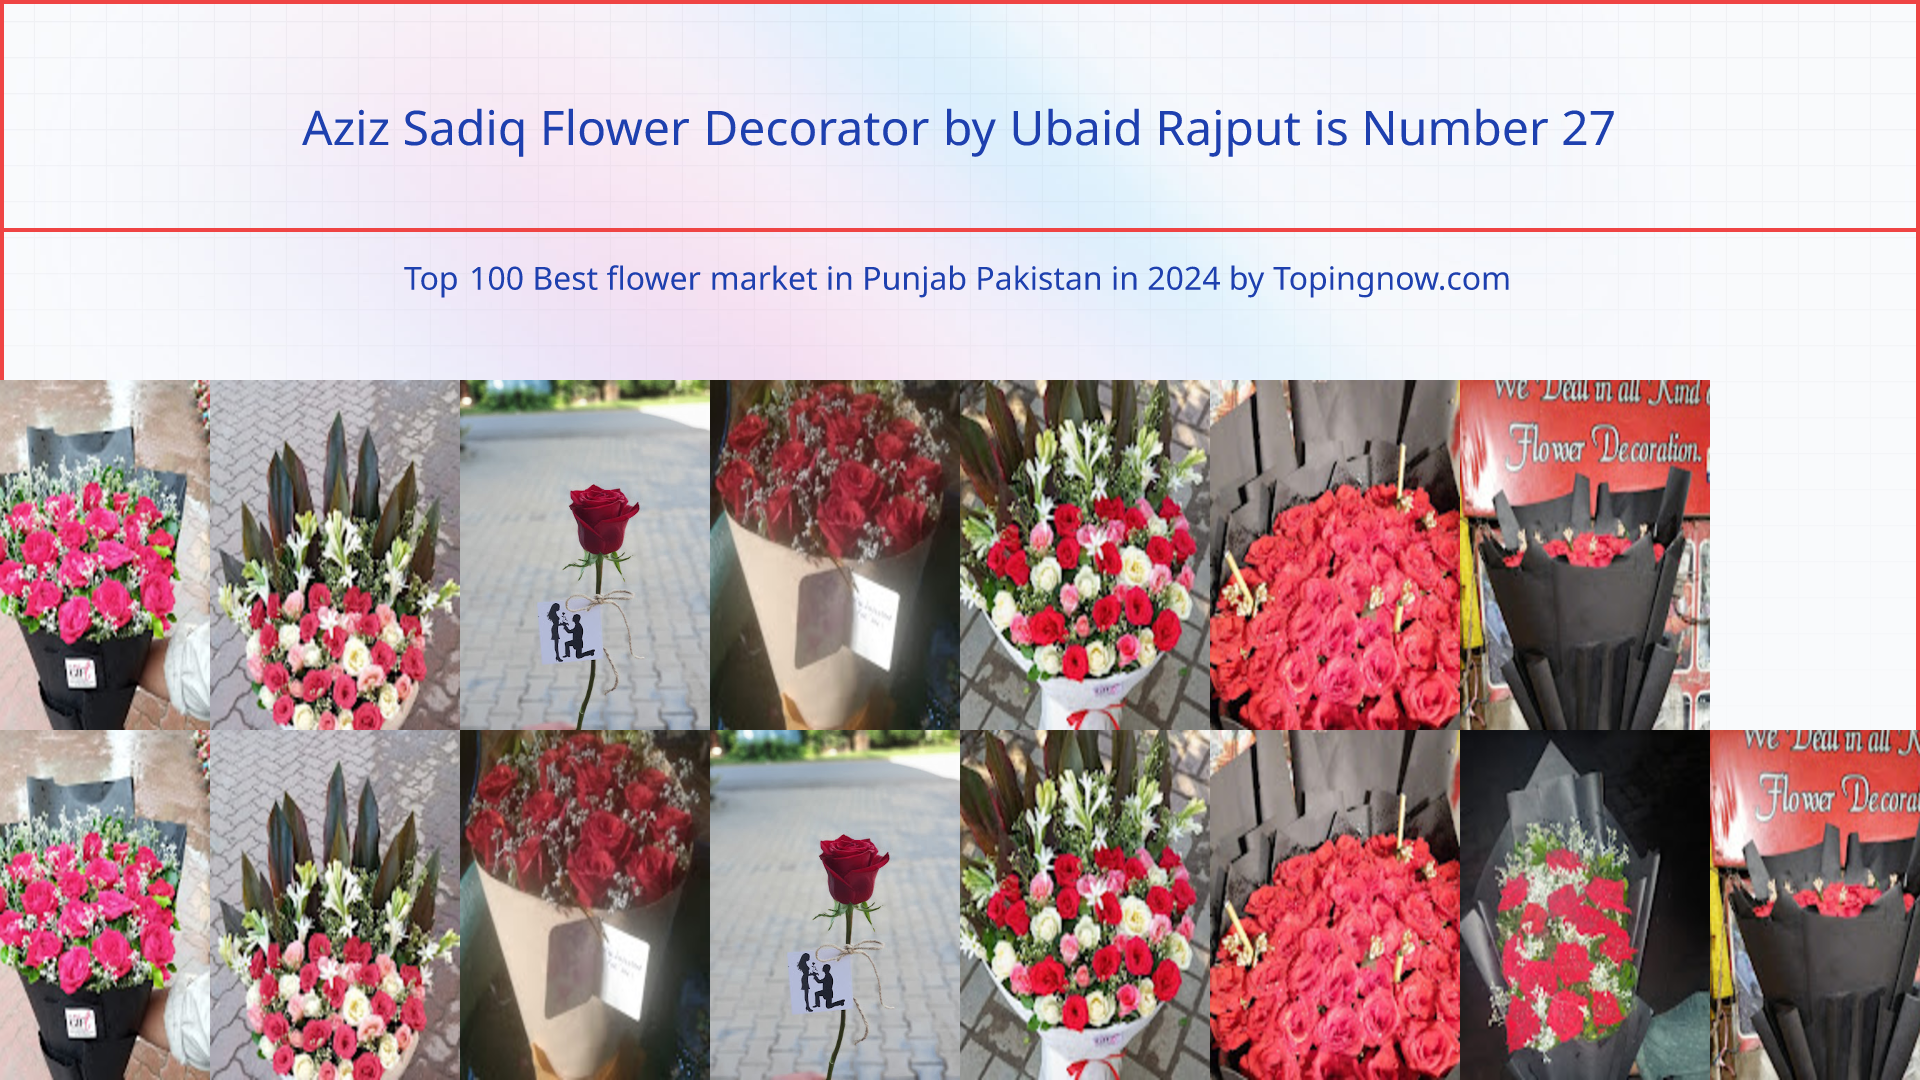 Aziz Sadiq Flower Decorator by Ubaid Rajput: Top 100 Best flower market in Punjab Pakistan in 2024